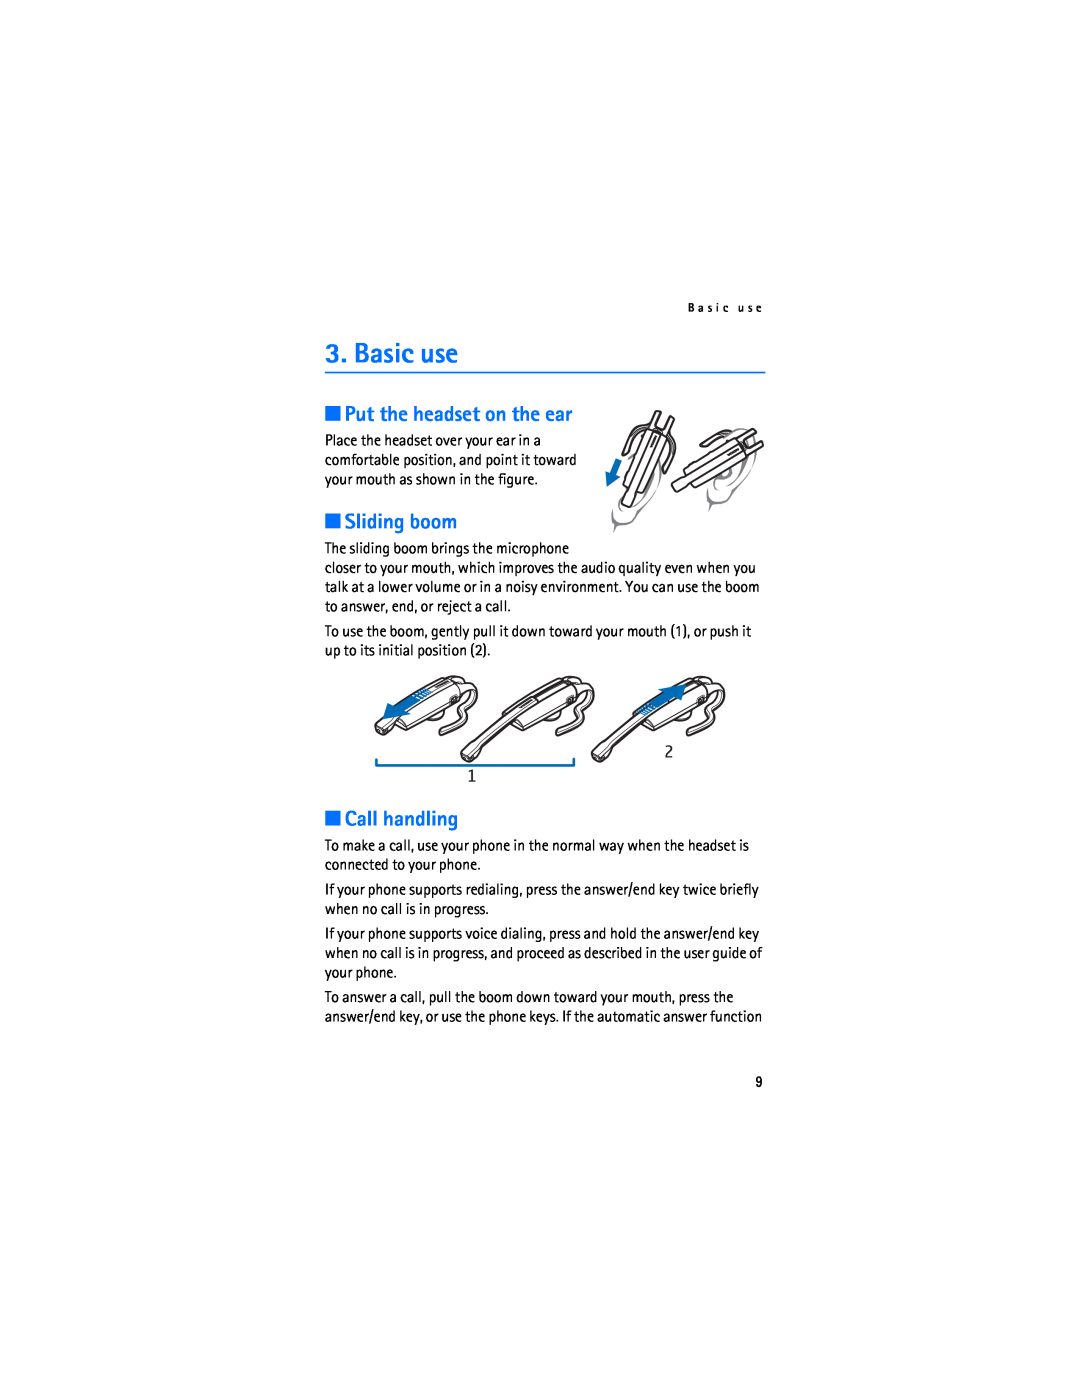 Nokia BH-900 manual Basic use, Put the headset on the ear, Sliding boom, Call handling 